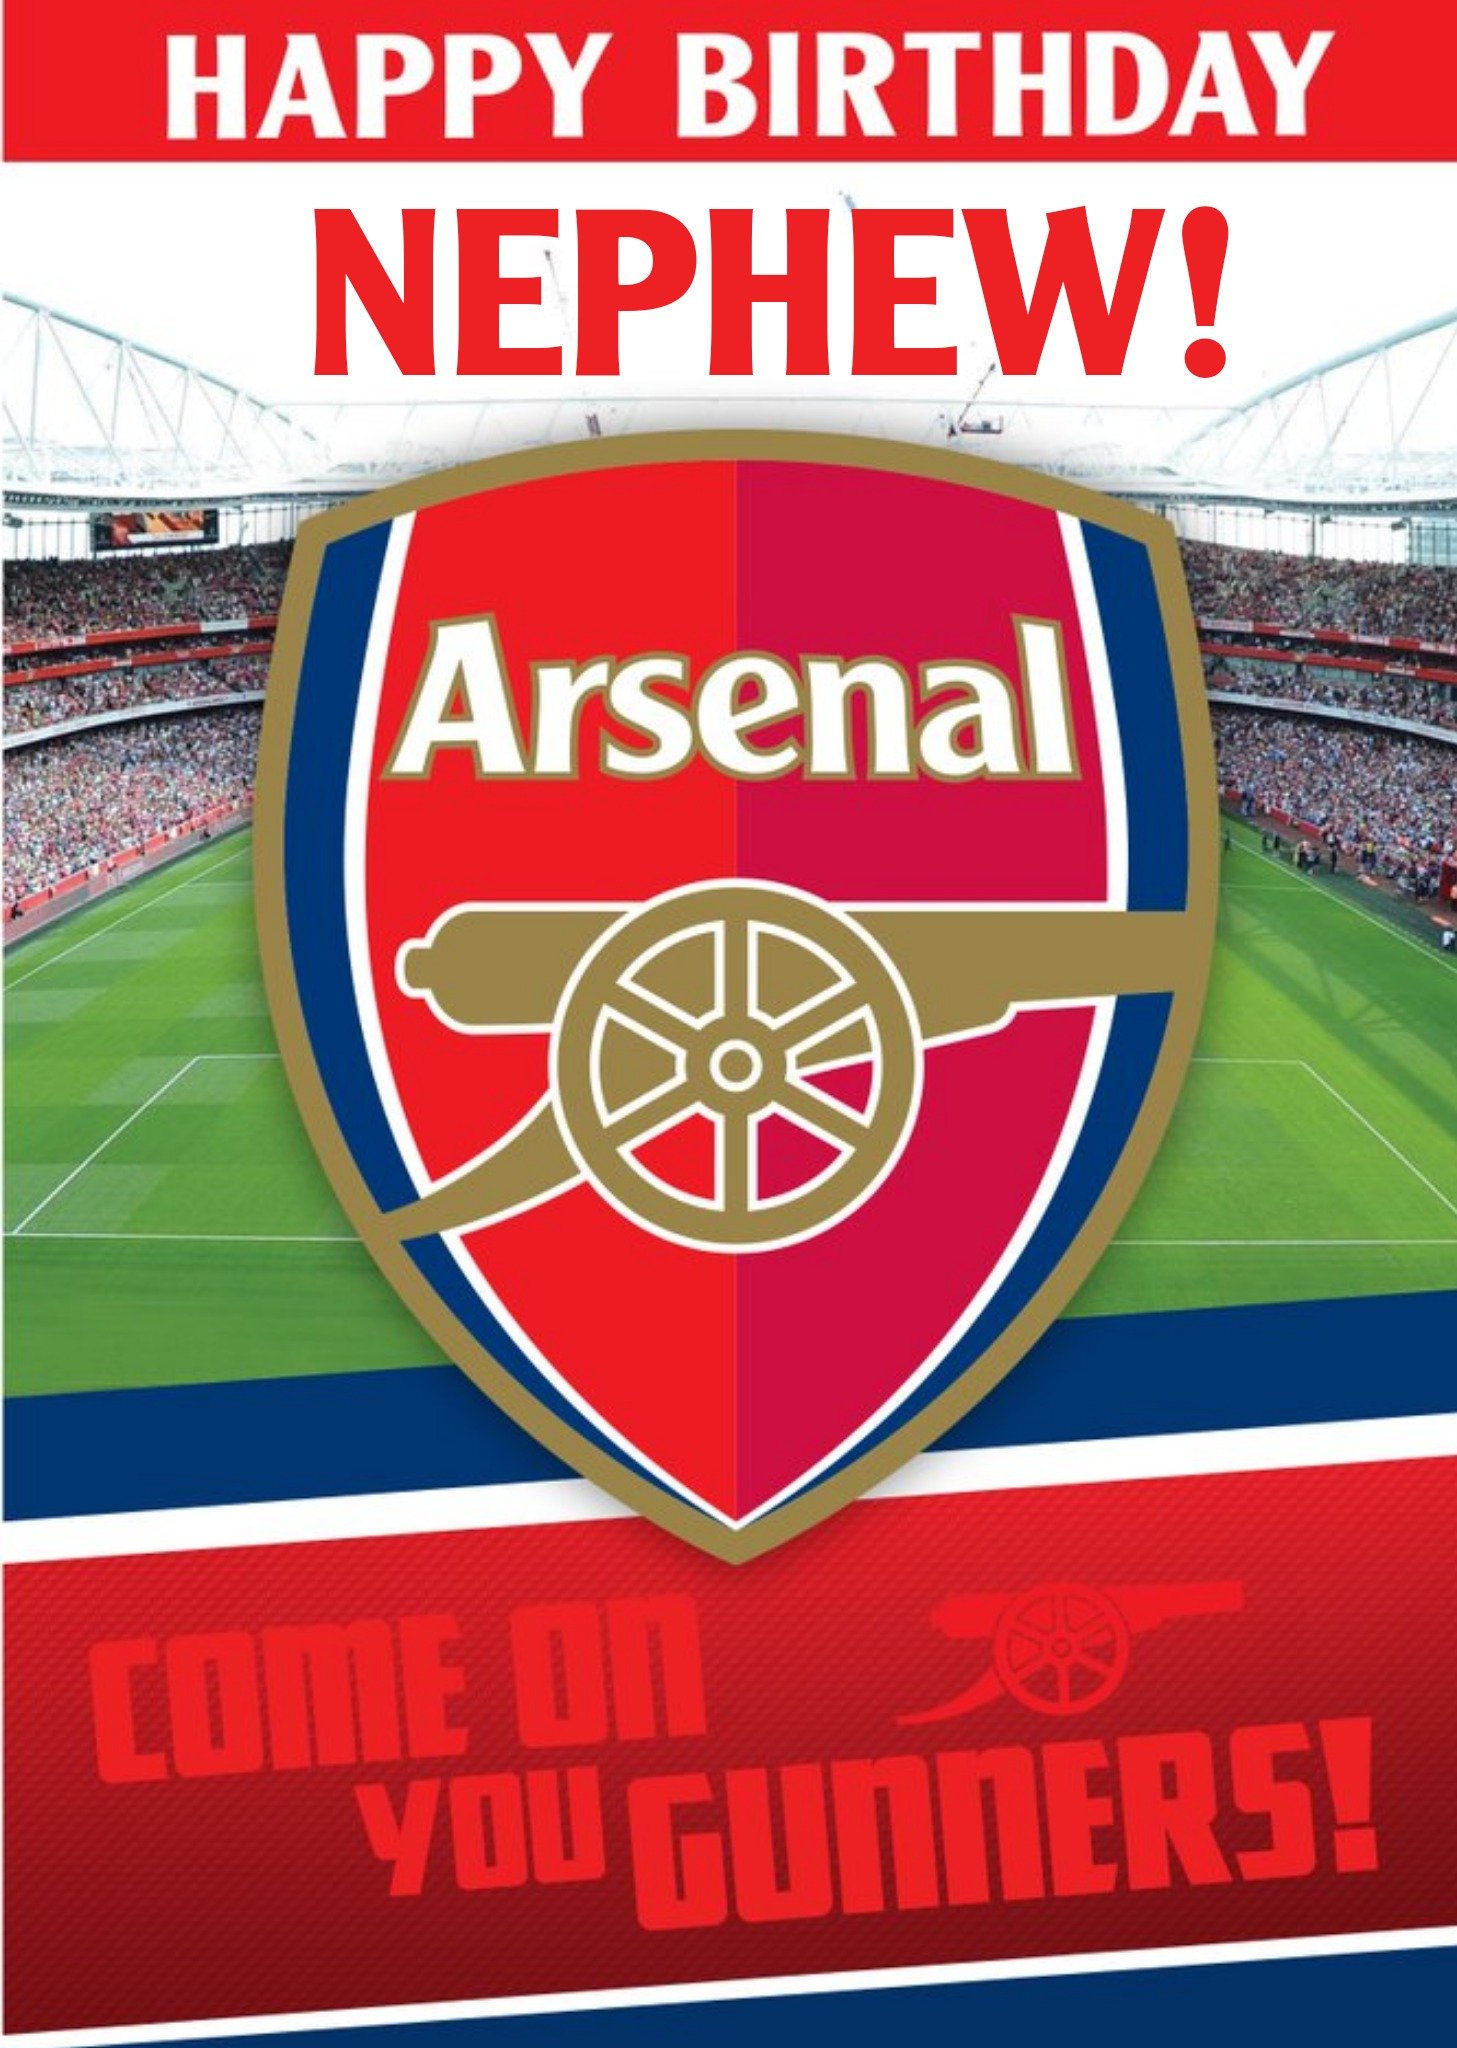 Arsenal Football Stadium Come On You Gunners Nephew Birthday Card Ecard